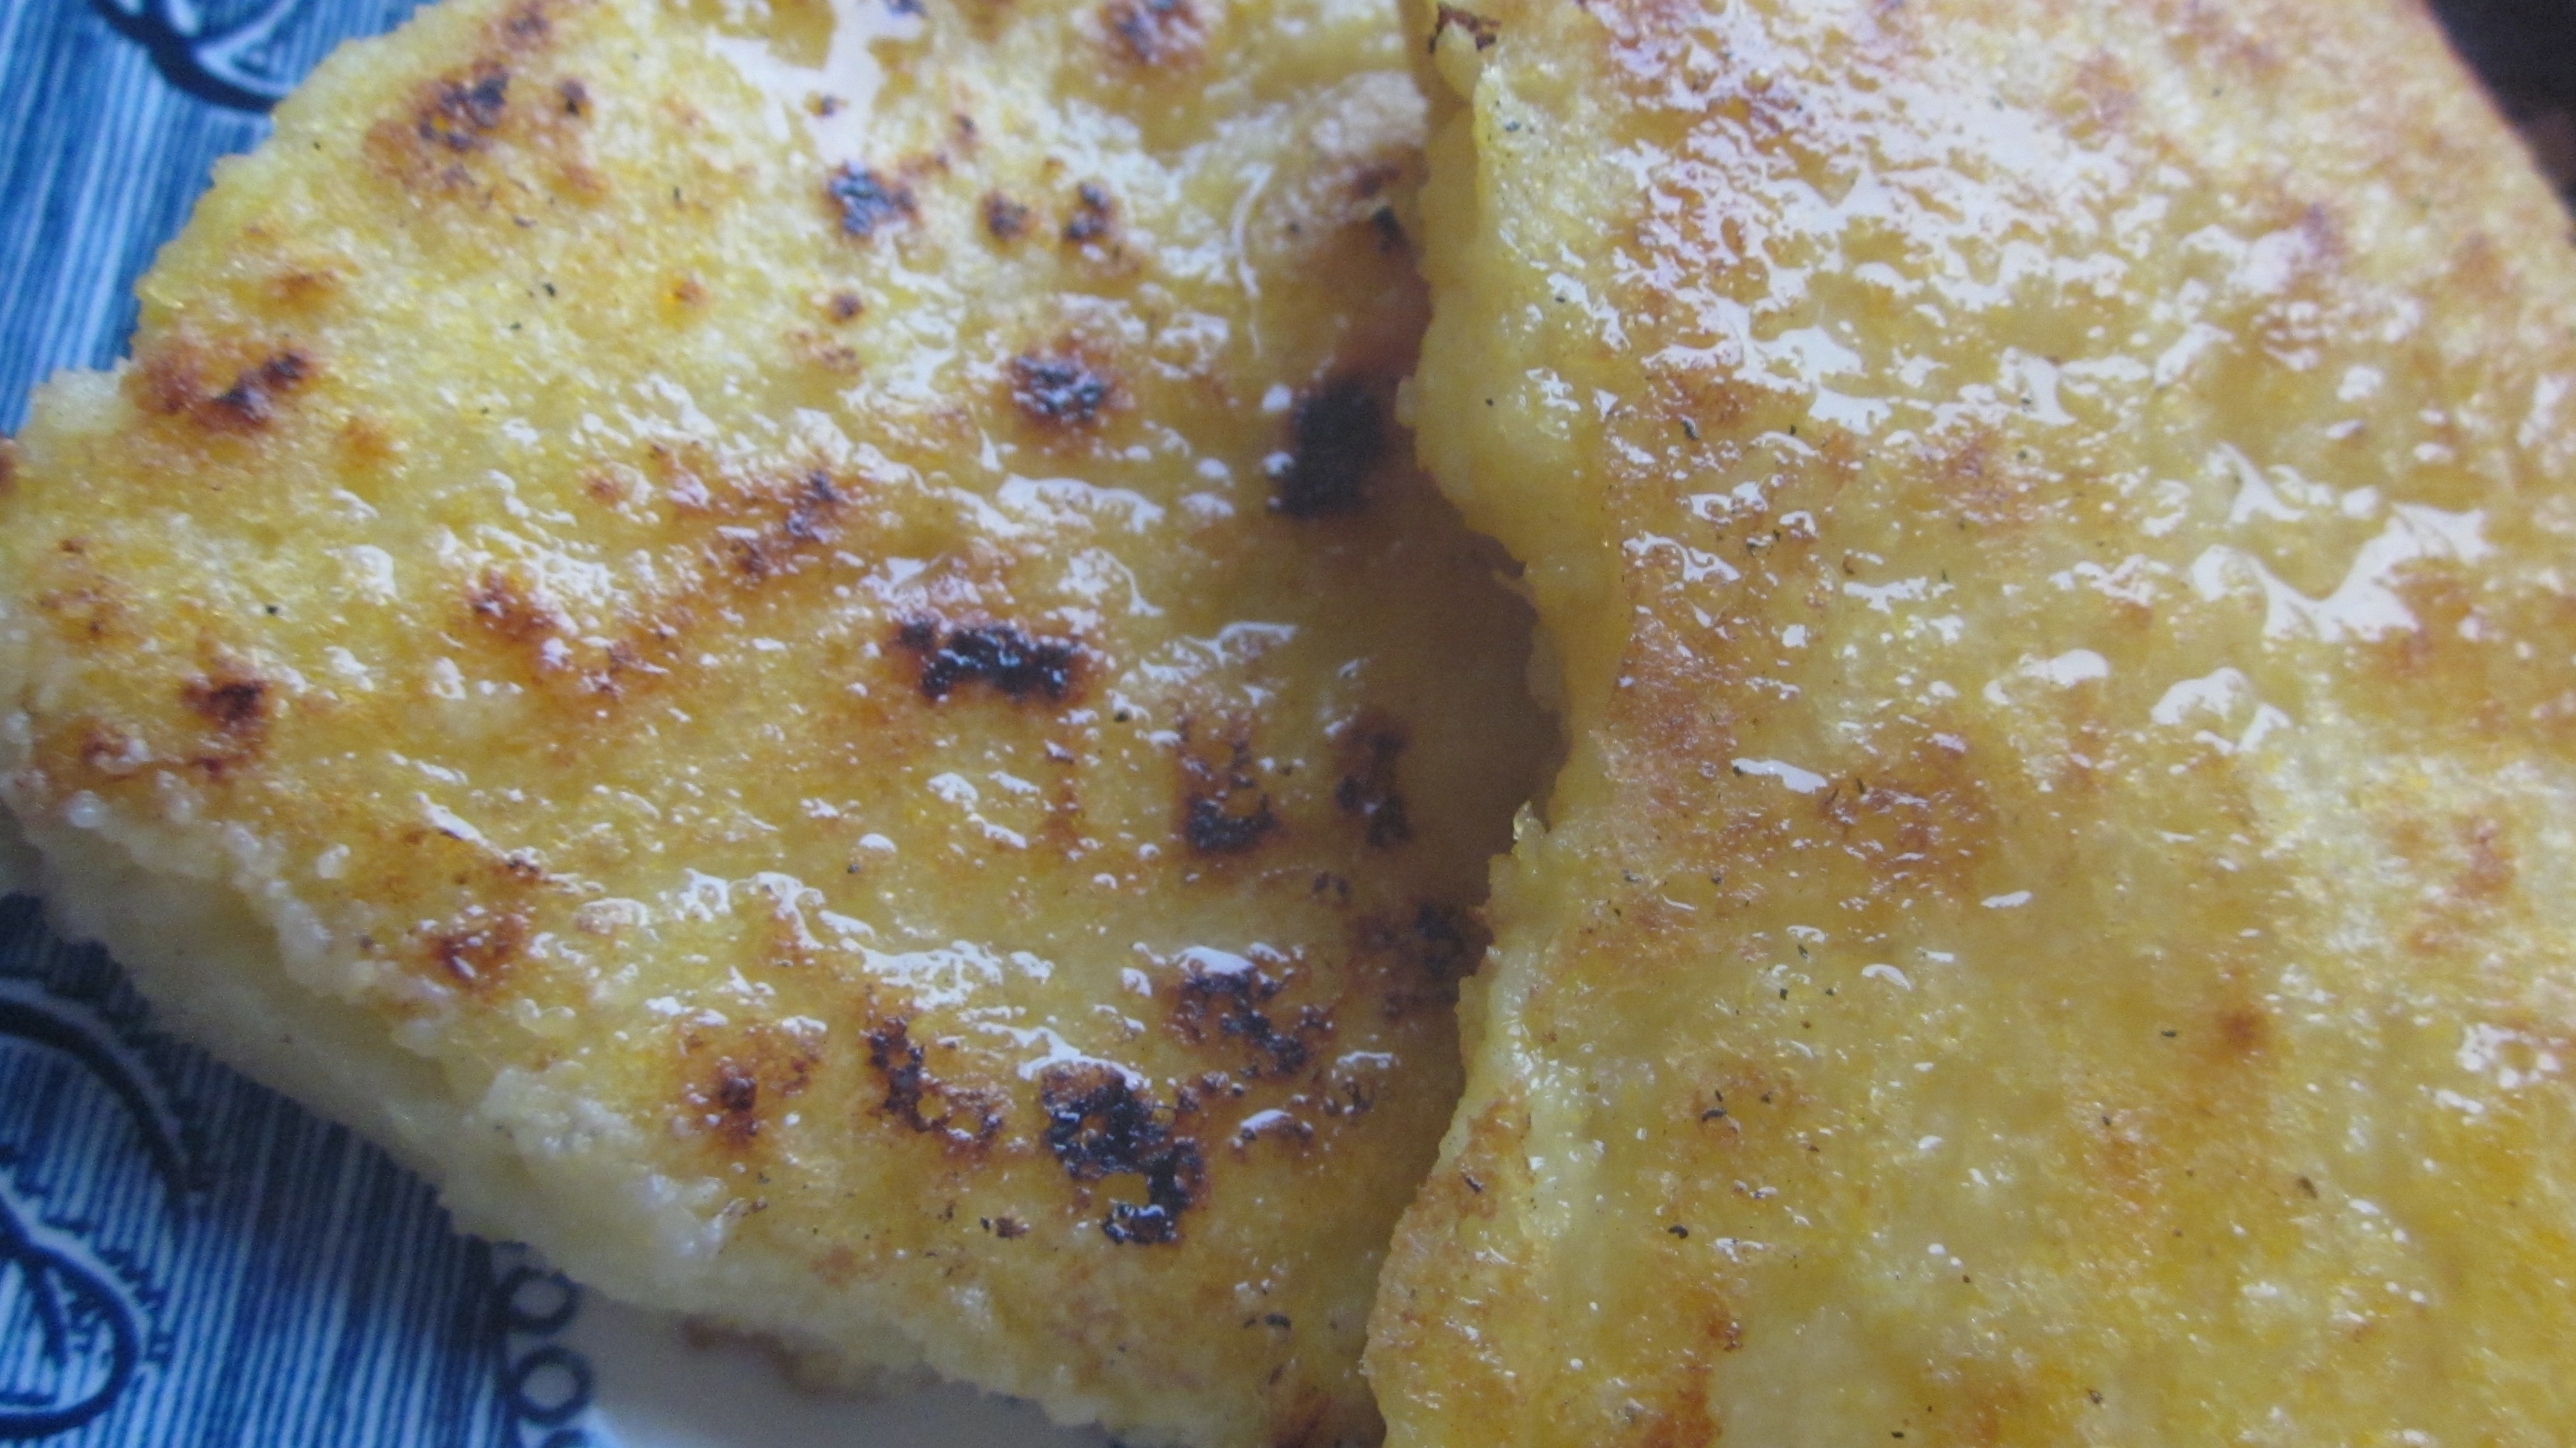 Fried cornmeal mush: peasant food that I love